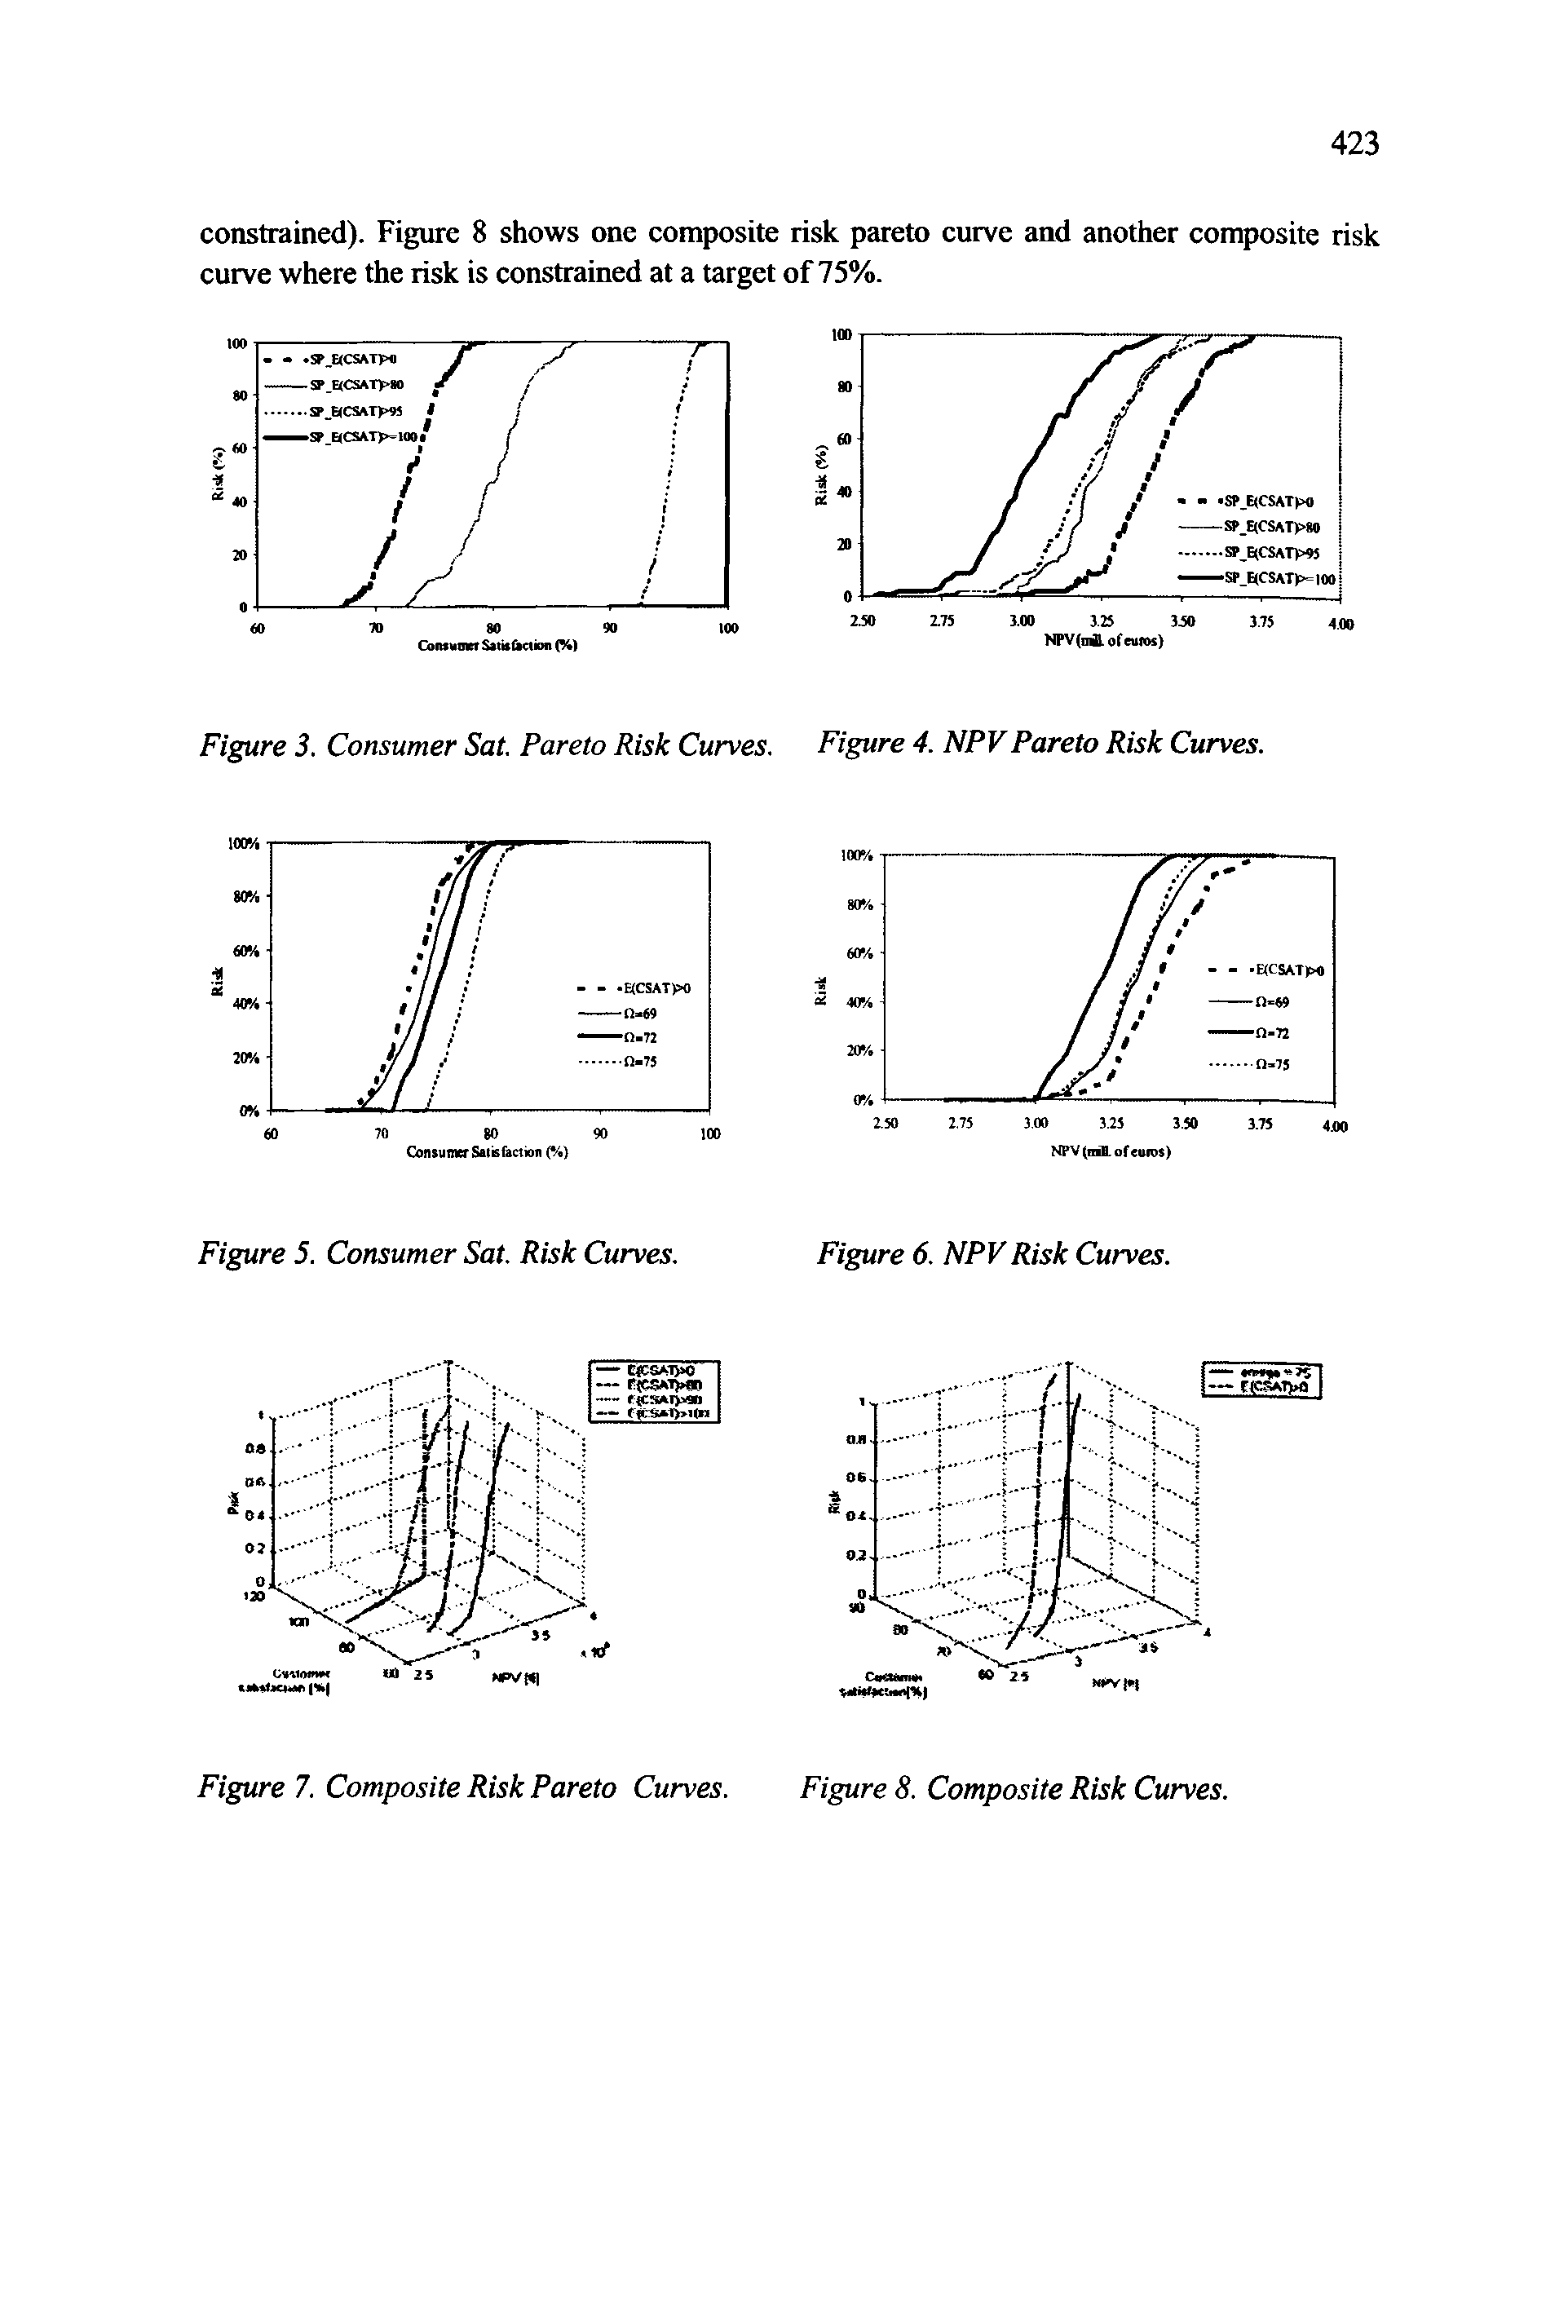 Figure 7. Composite Risk Pareto Curves. Figure 8. Composite Risk Curves.